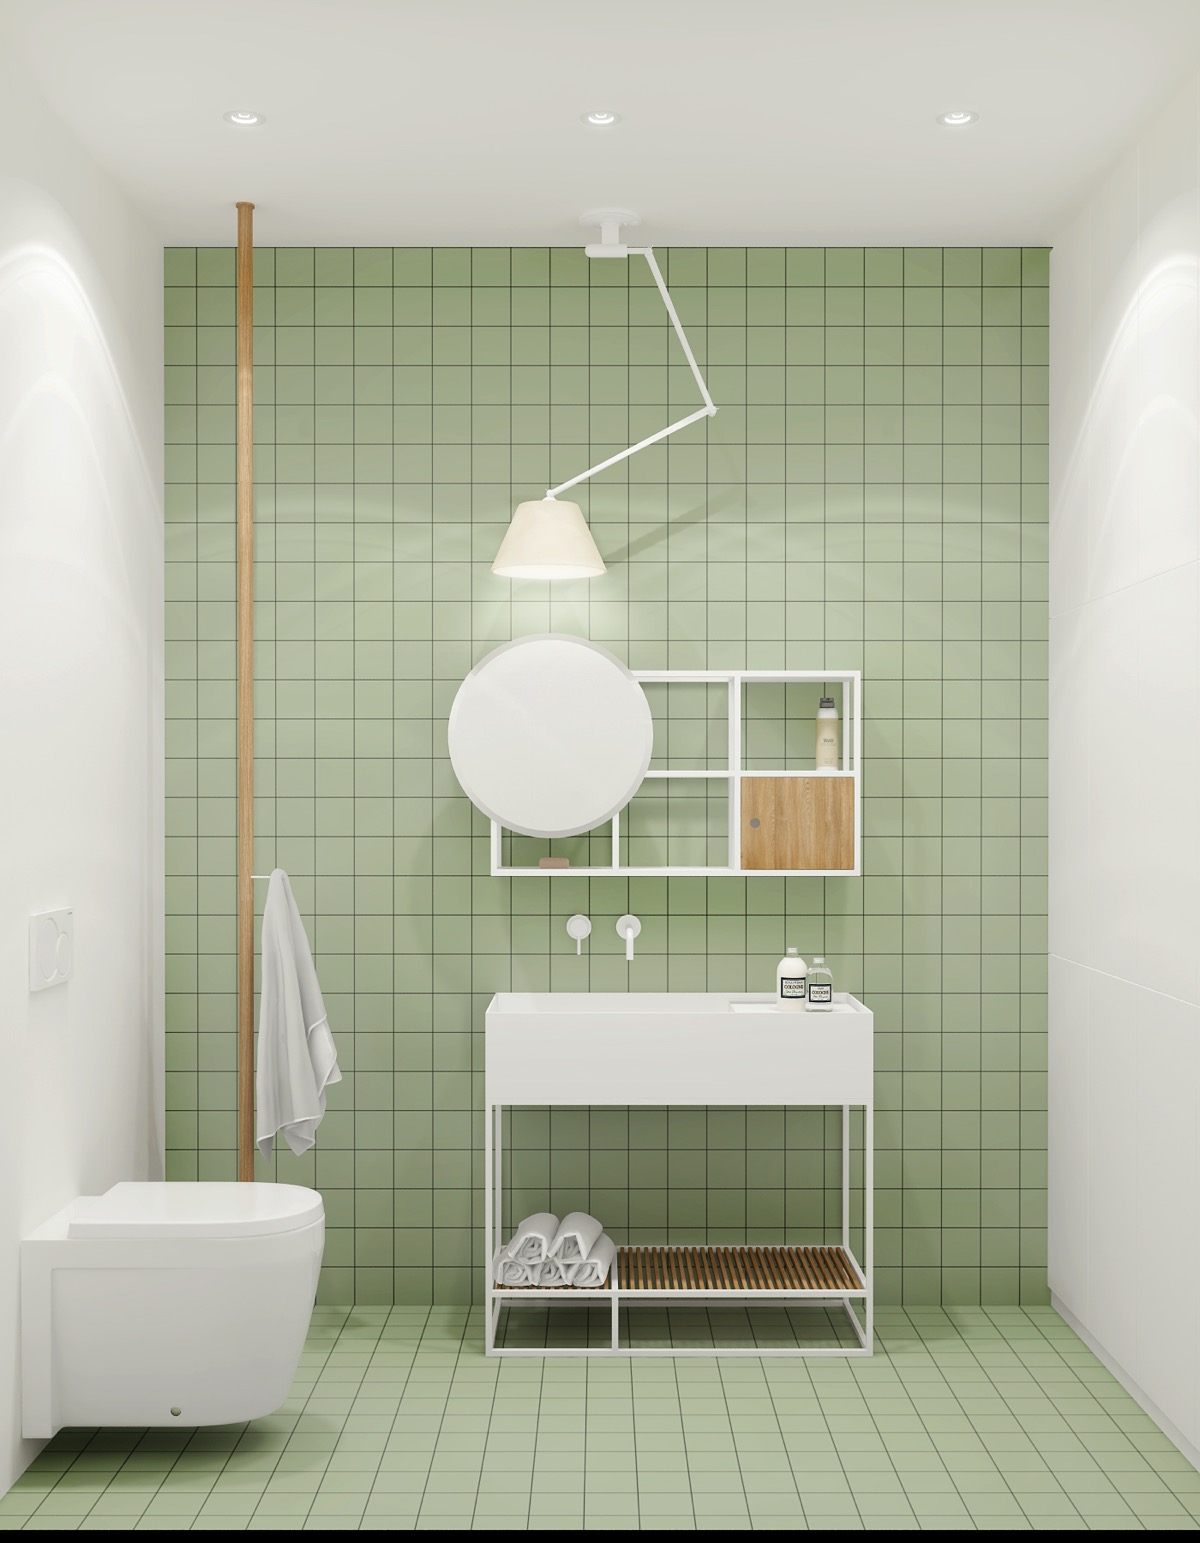 White, metal-framed furniture places crisp outlines onto this green bathroom background.